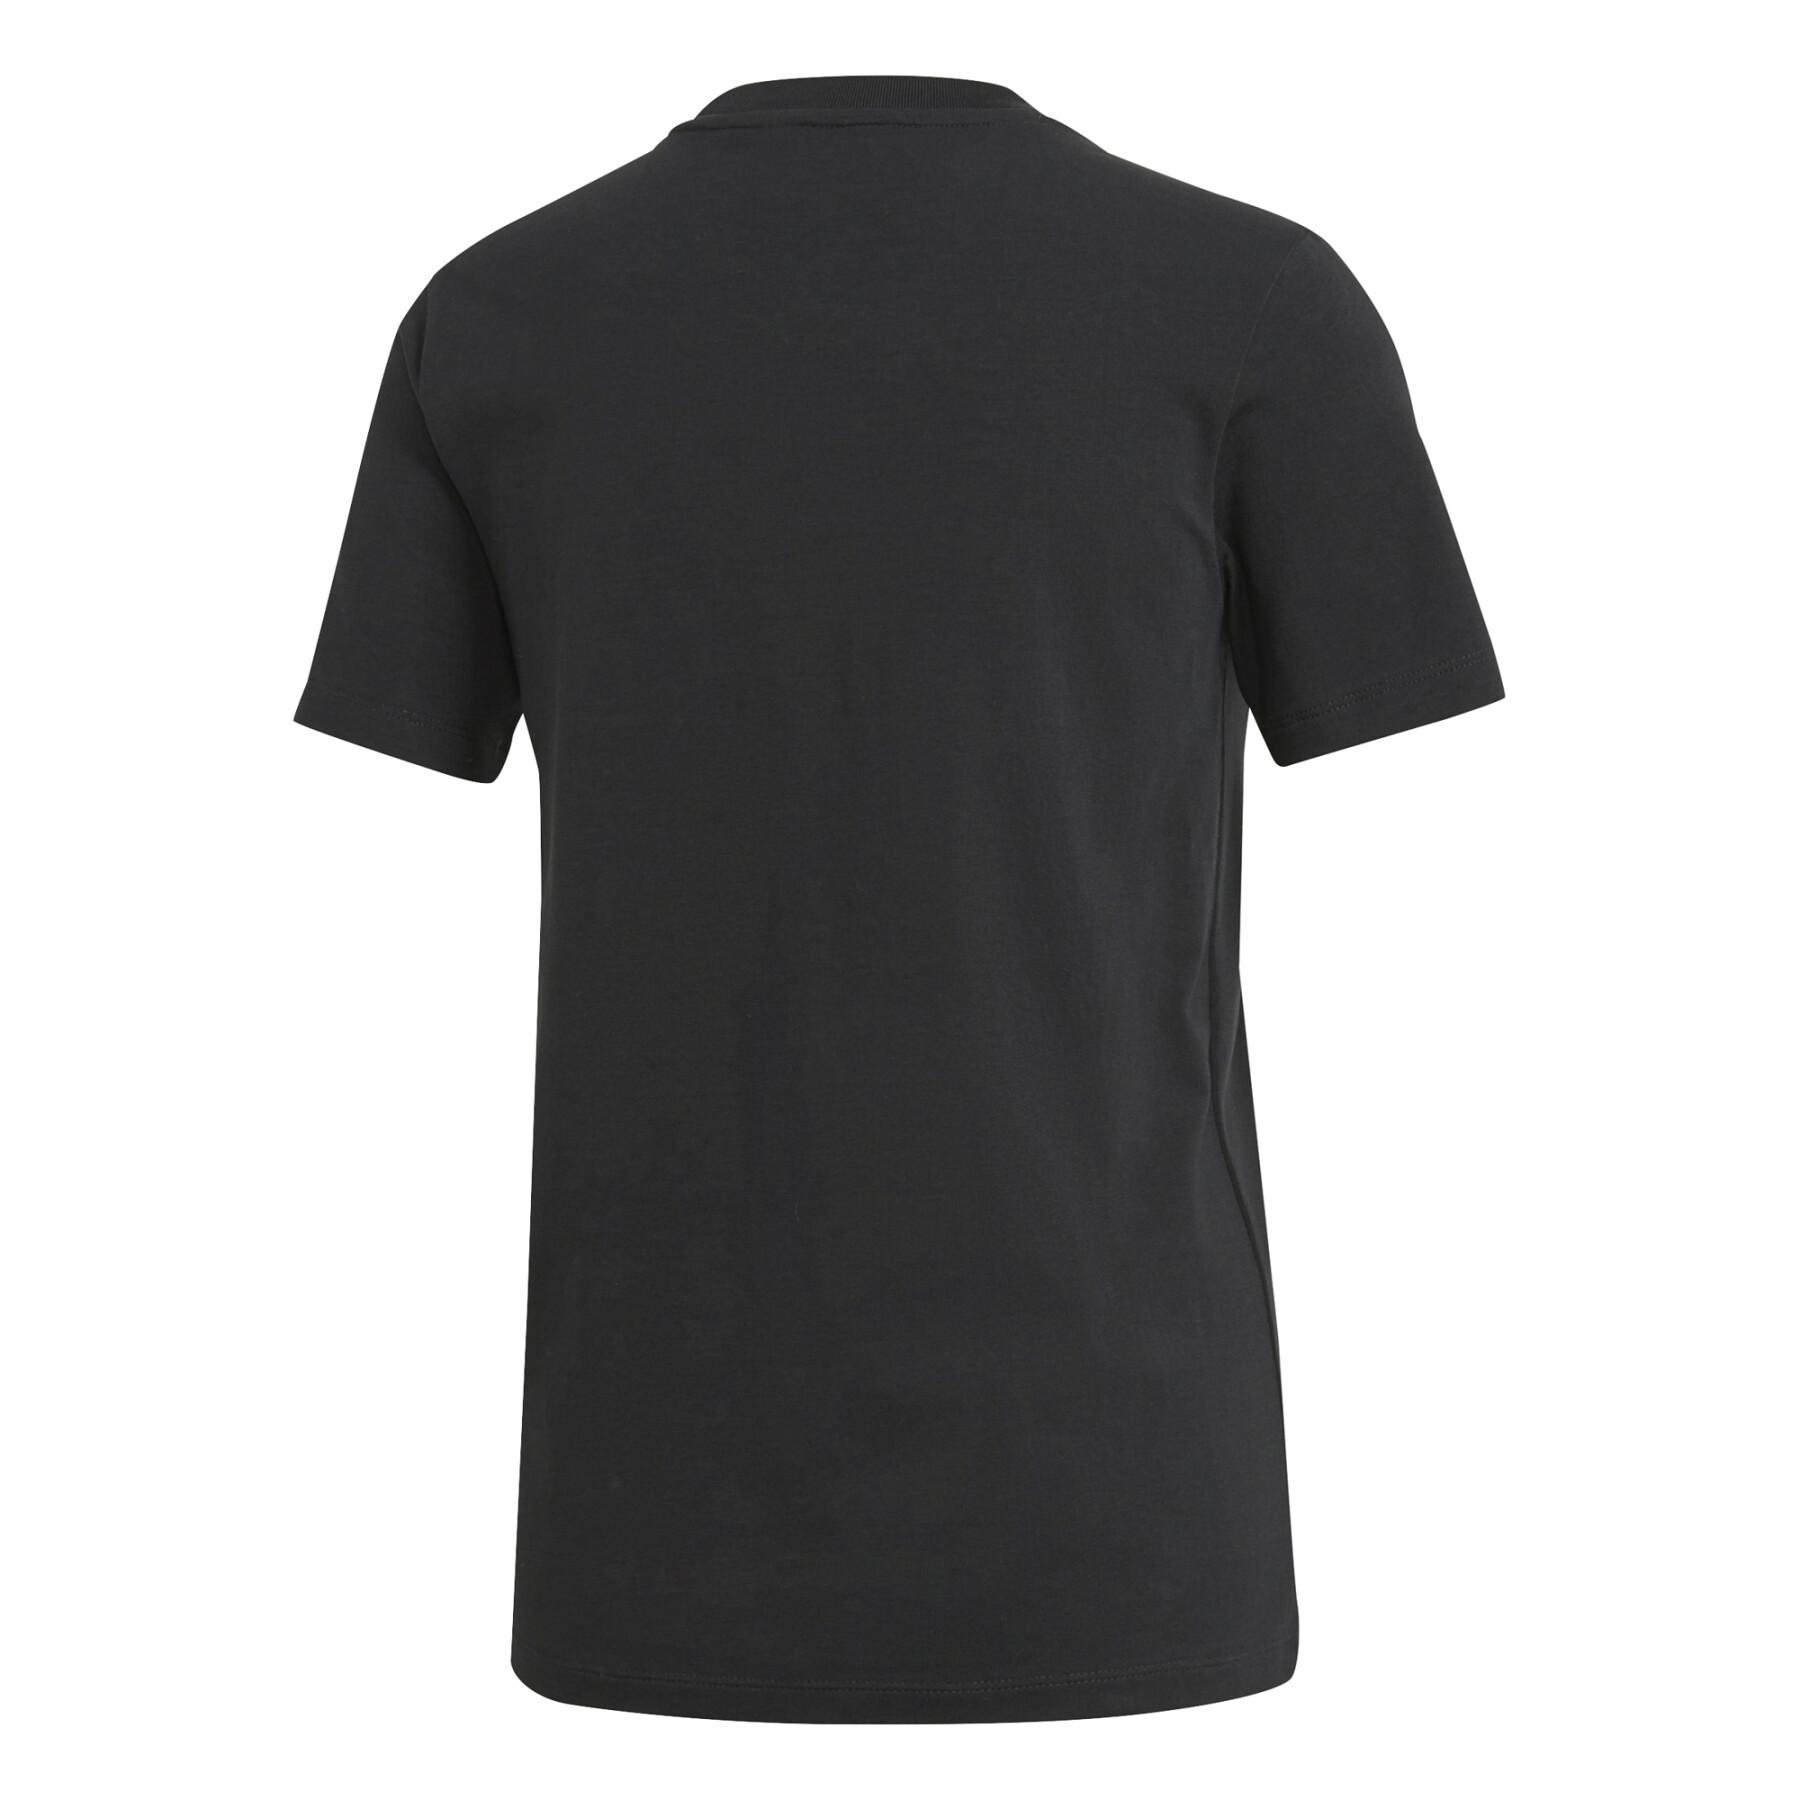 Camiseta feminina adidas Trefoil maille jersey